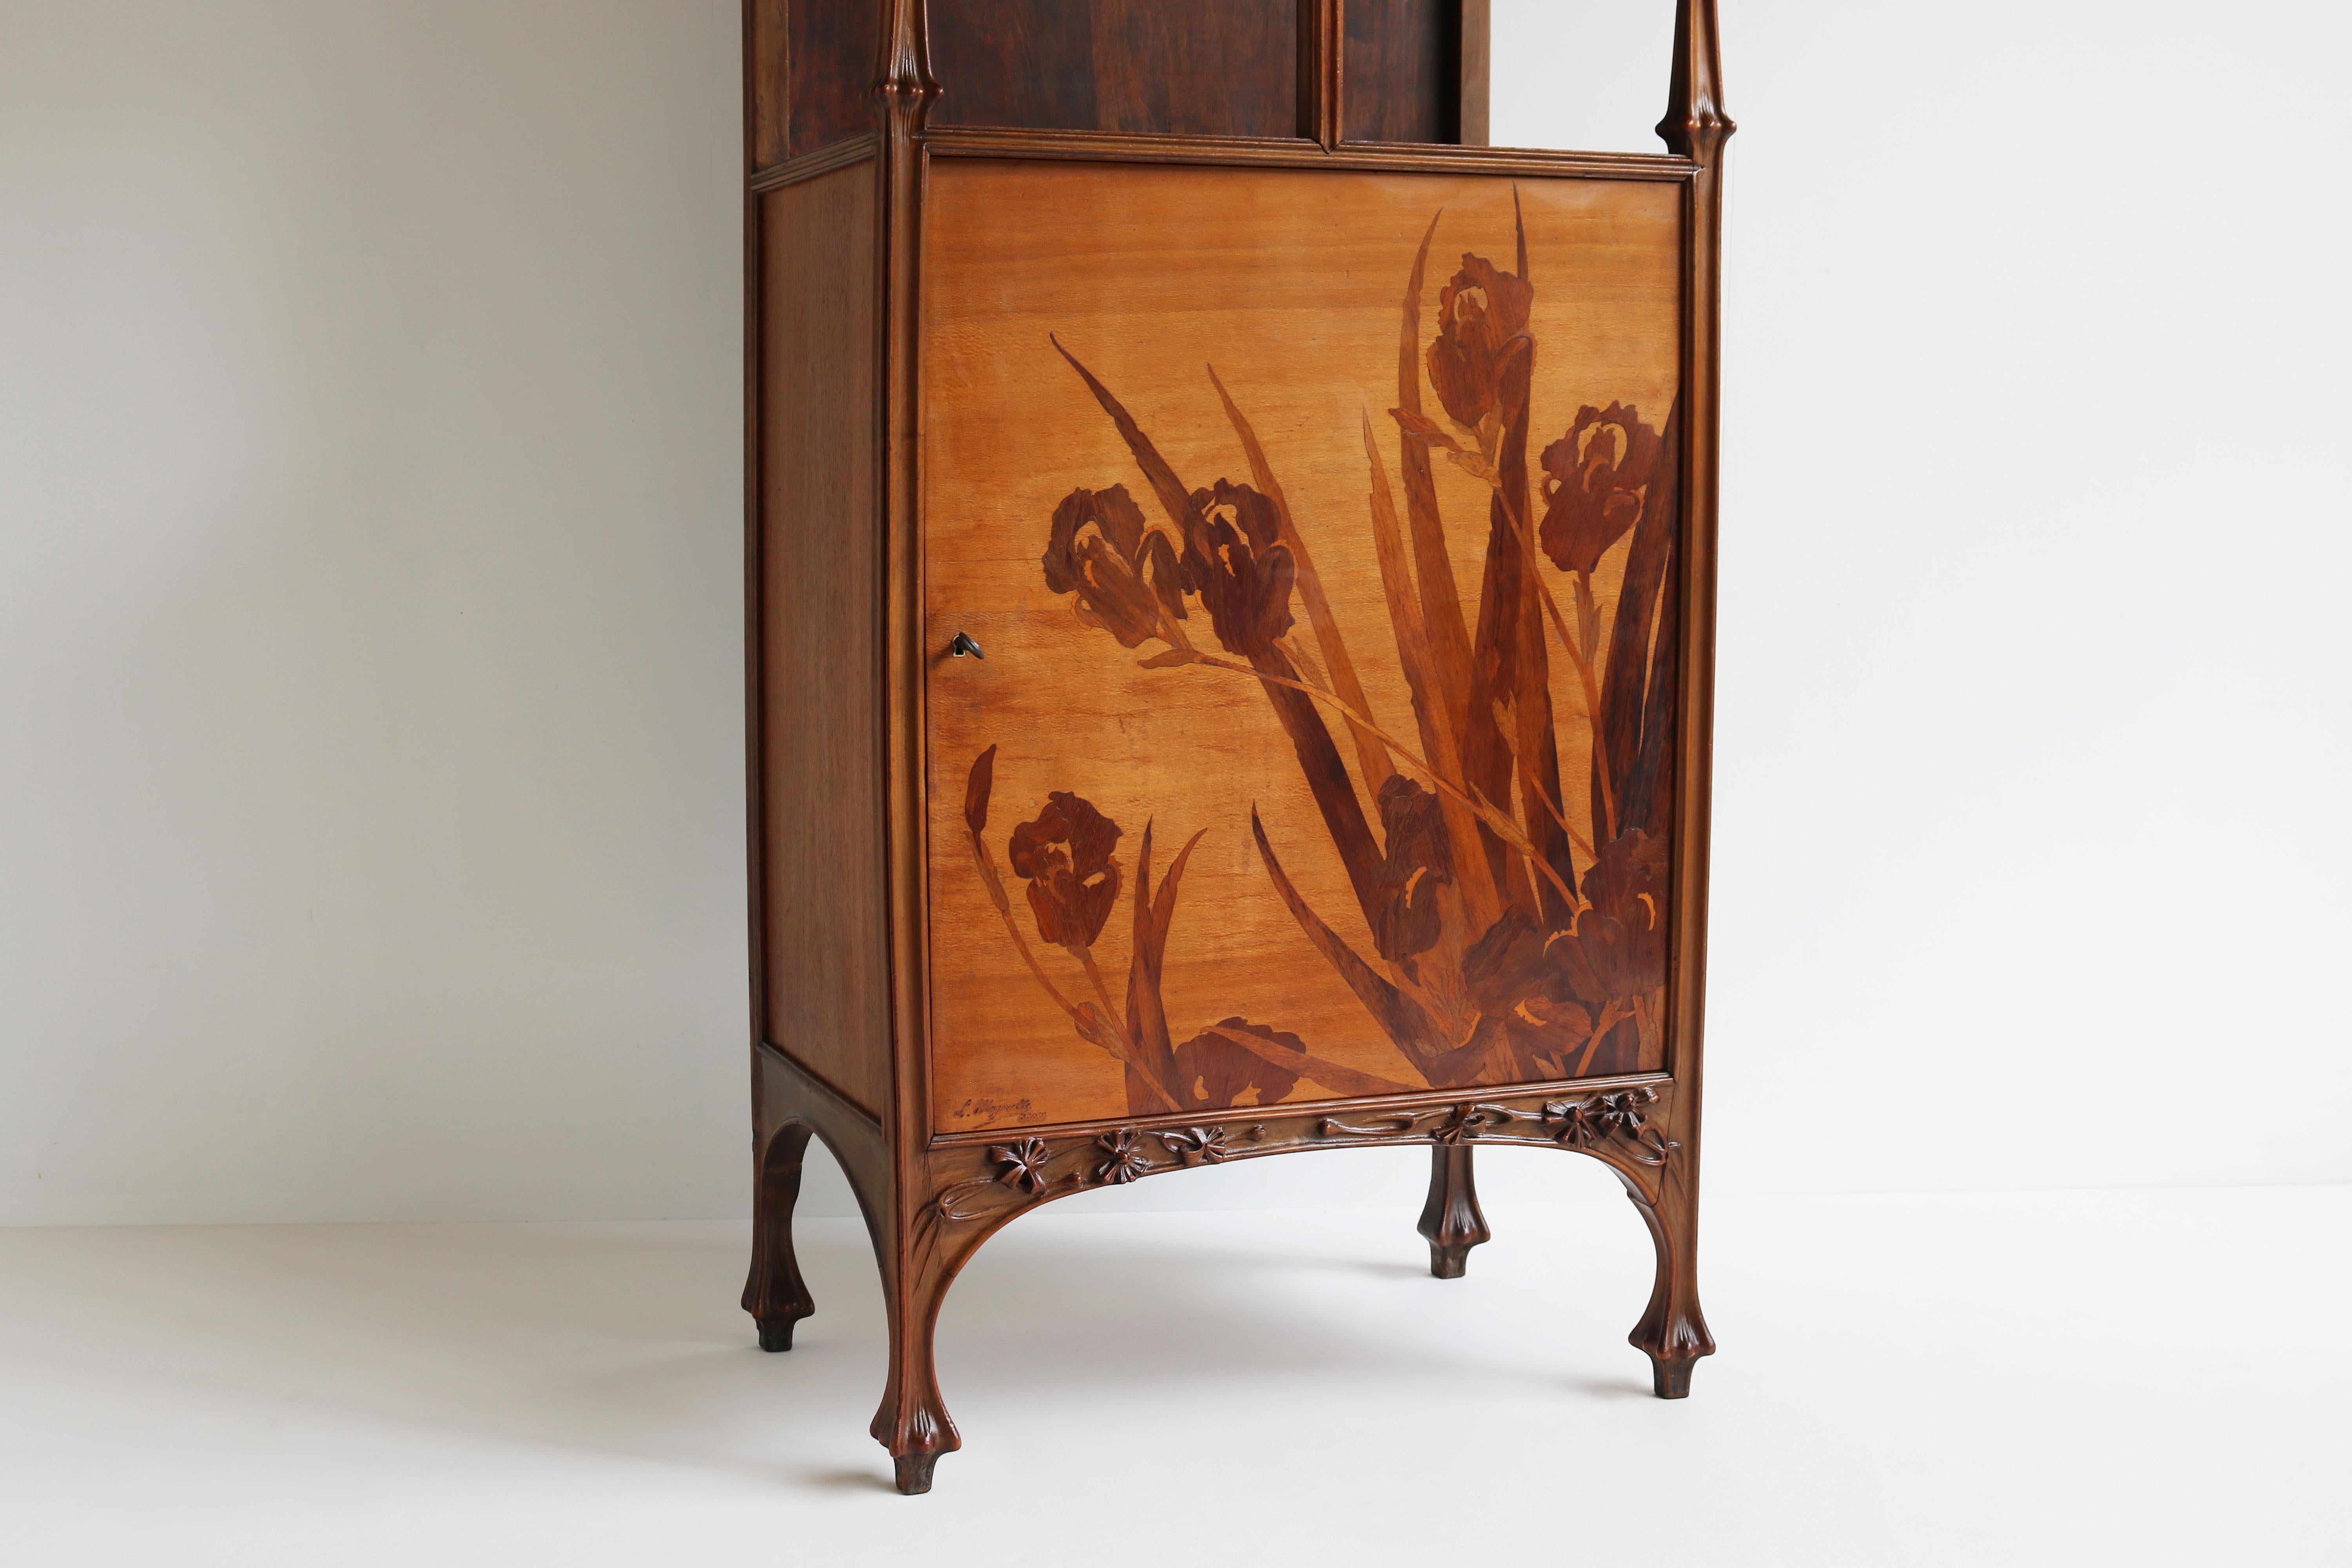 Hand-Carved Exceptional Art Nouveau Cabinet by Louis Majorelle 1900 French Antique Nancy For Sale